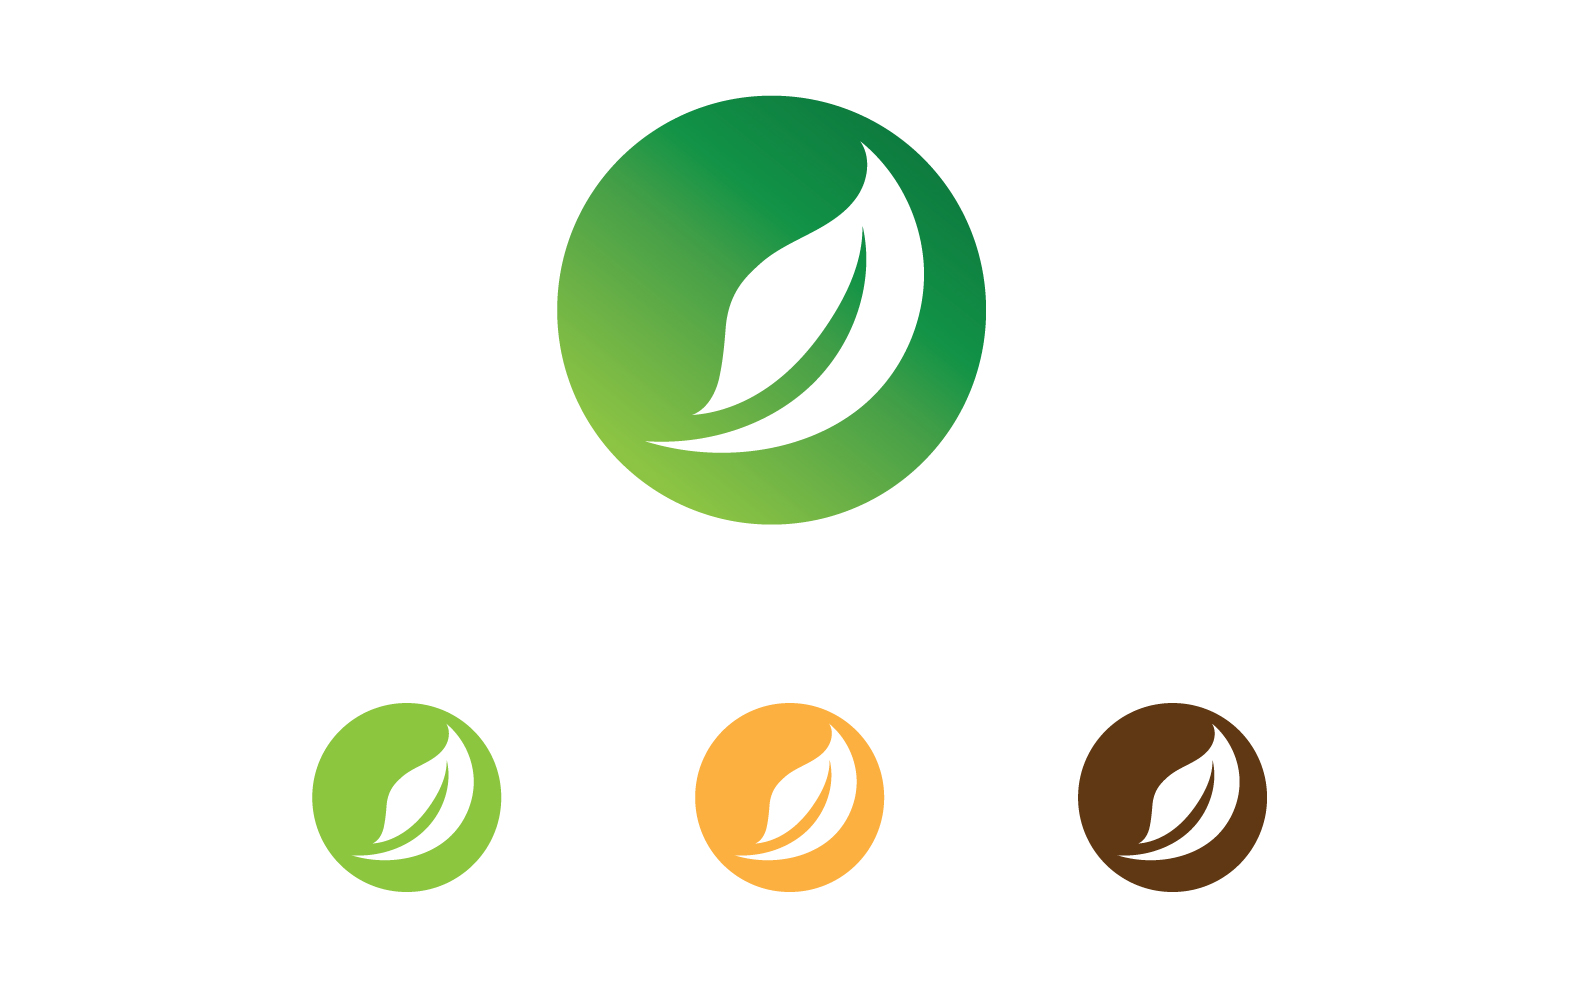 Eco green leaf nature fresh tree element logo v12